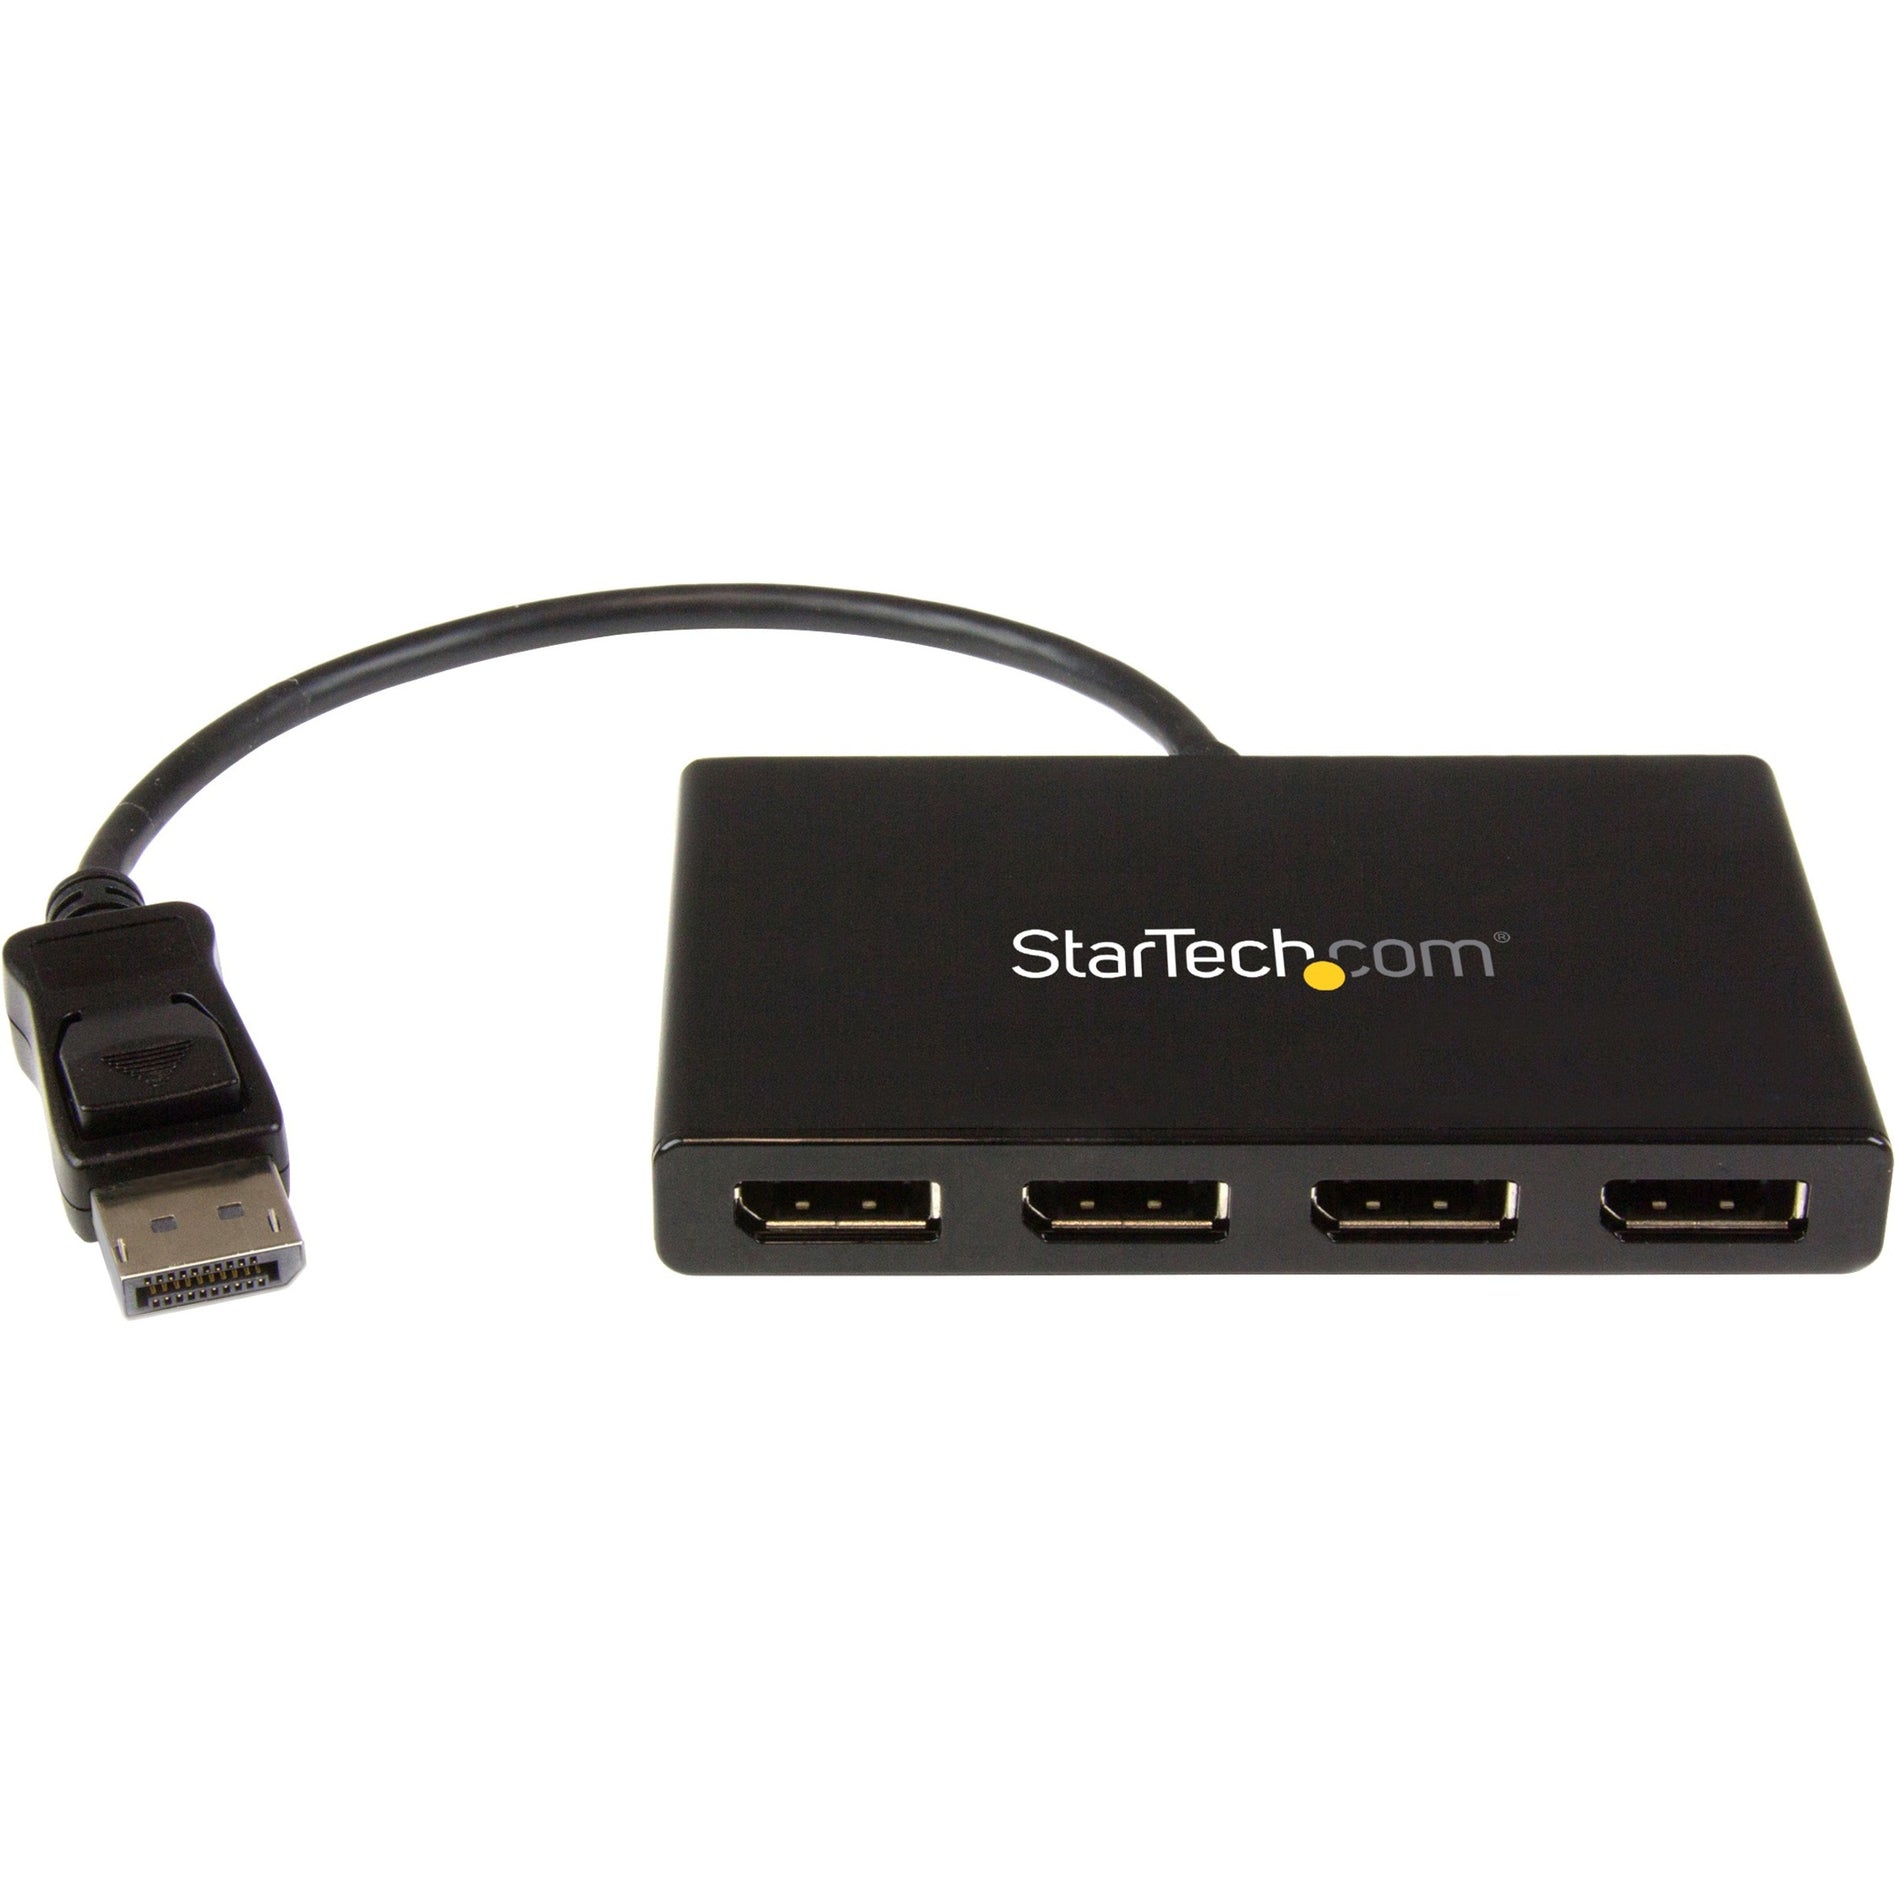 StarTech.com MSTDP124DP MST Hub - DisplayPort to 4x DisplayPort, Multi Stream Transport Hub - DP 1.2 to DP, 4K Video Resolution